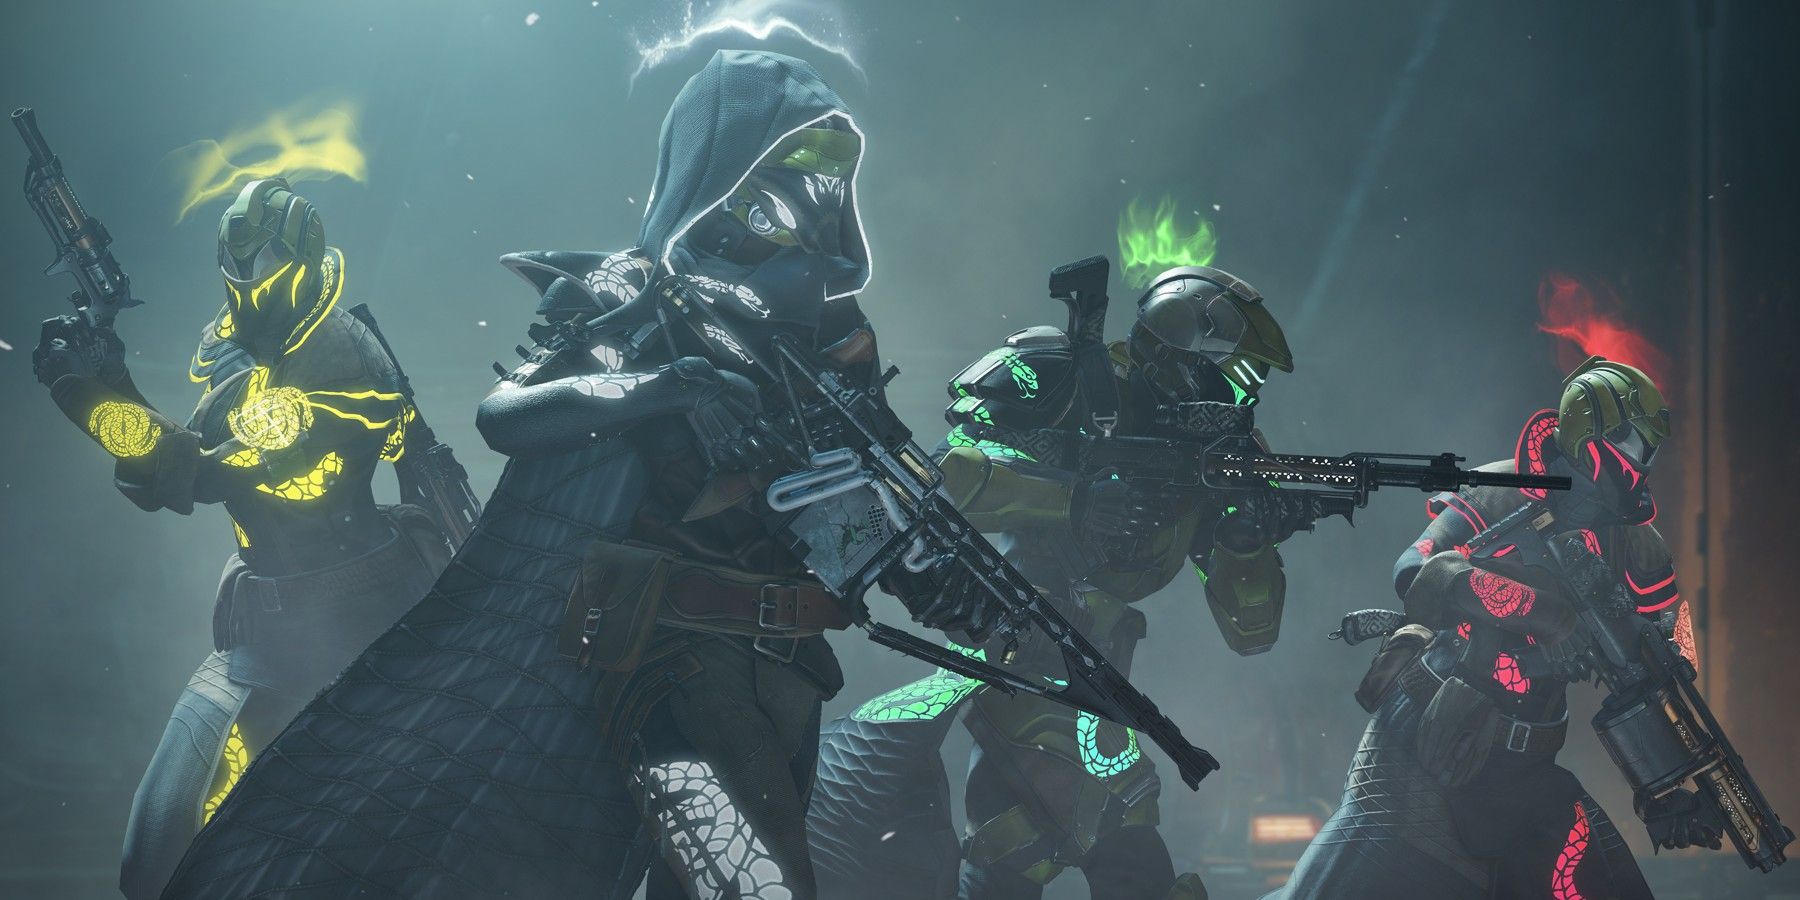 A sword-burning team exploring together in Destiny 2